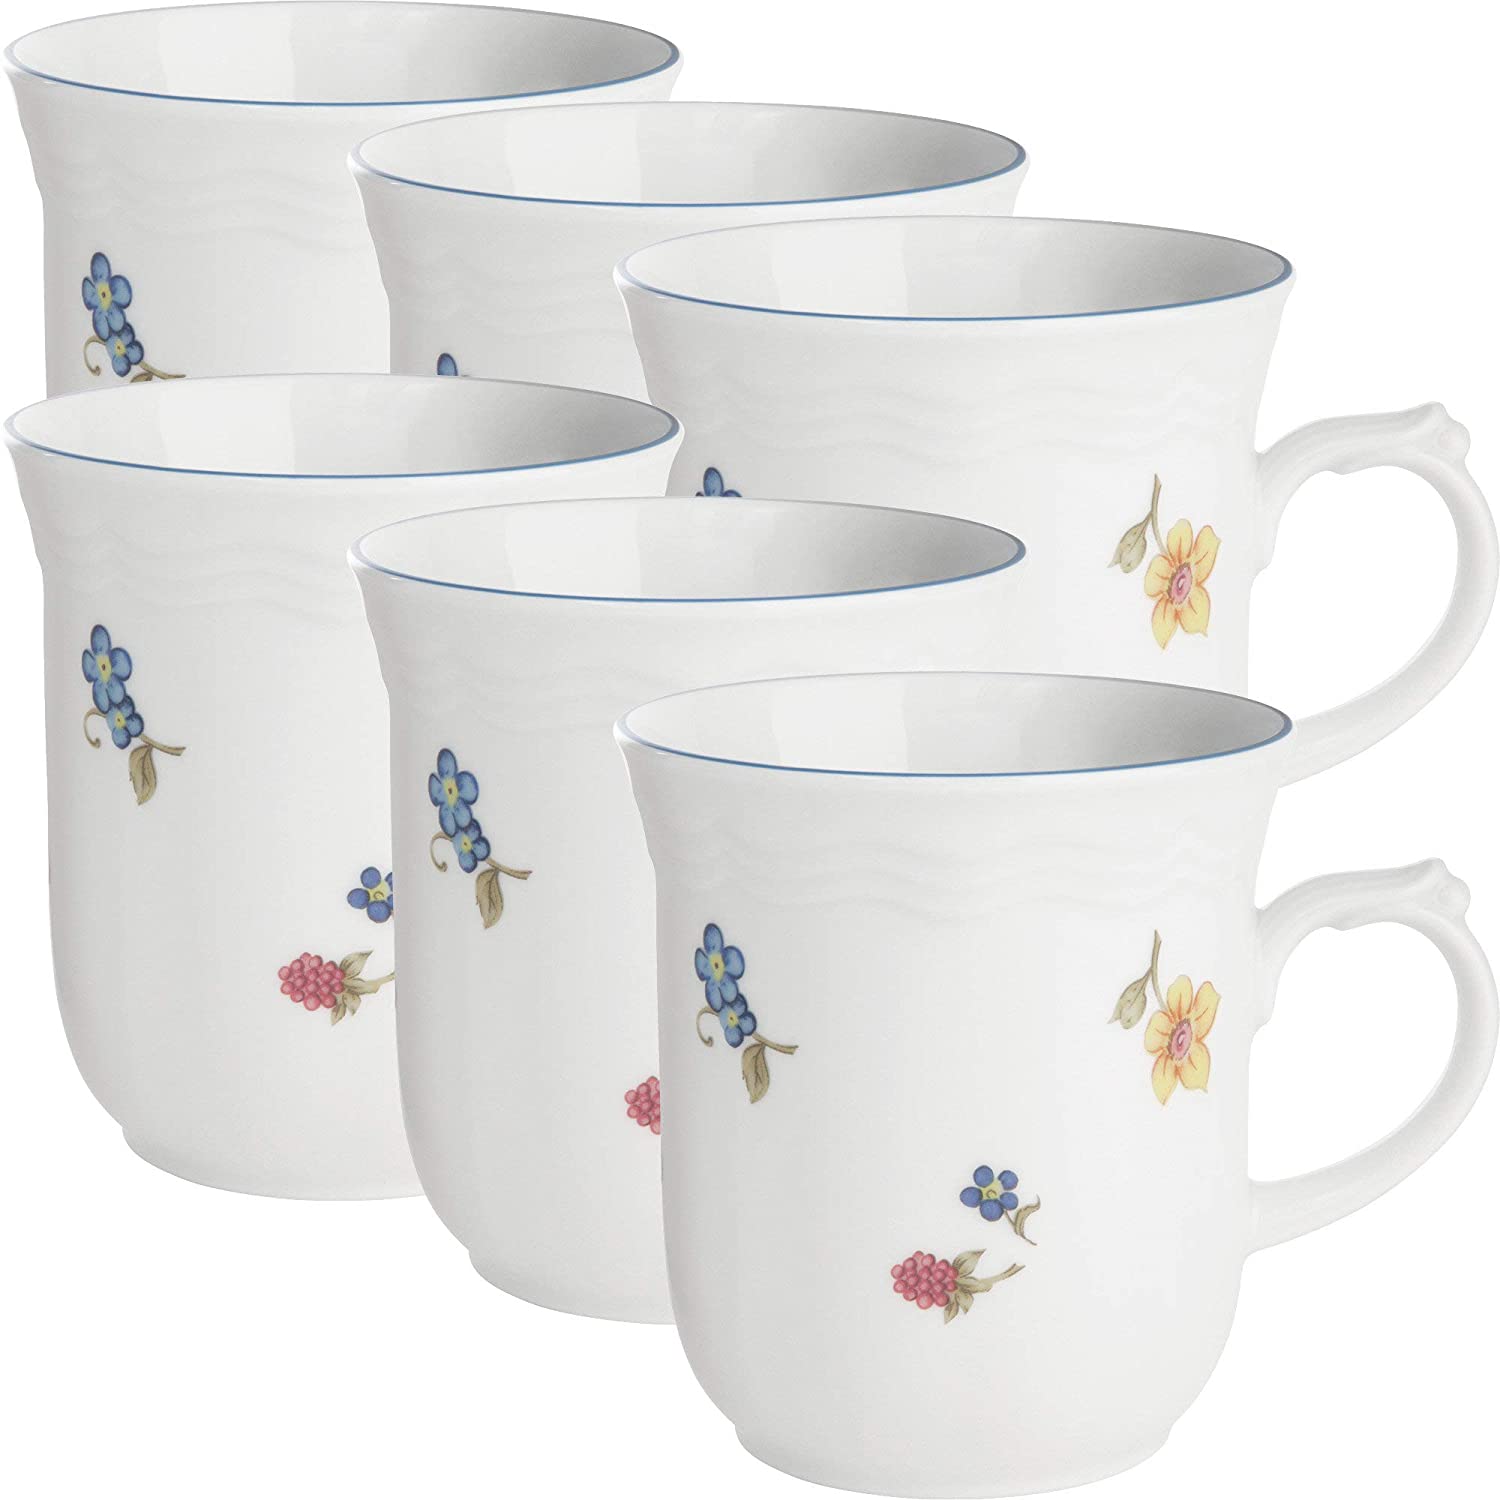 Seltmann Weiden Porcelain Coffee Mugs Pack of 6 Scattered Flowers Pattern